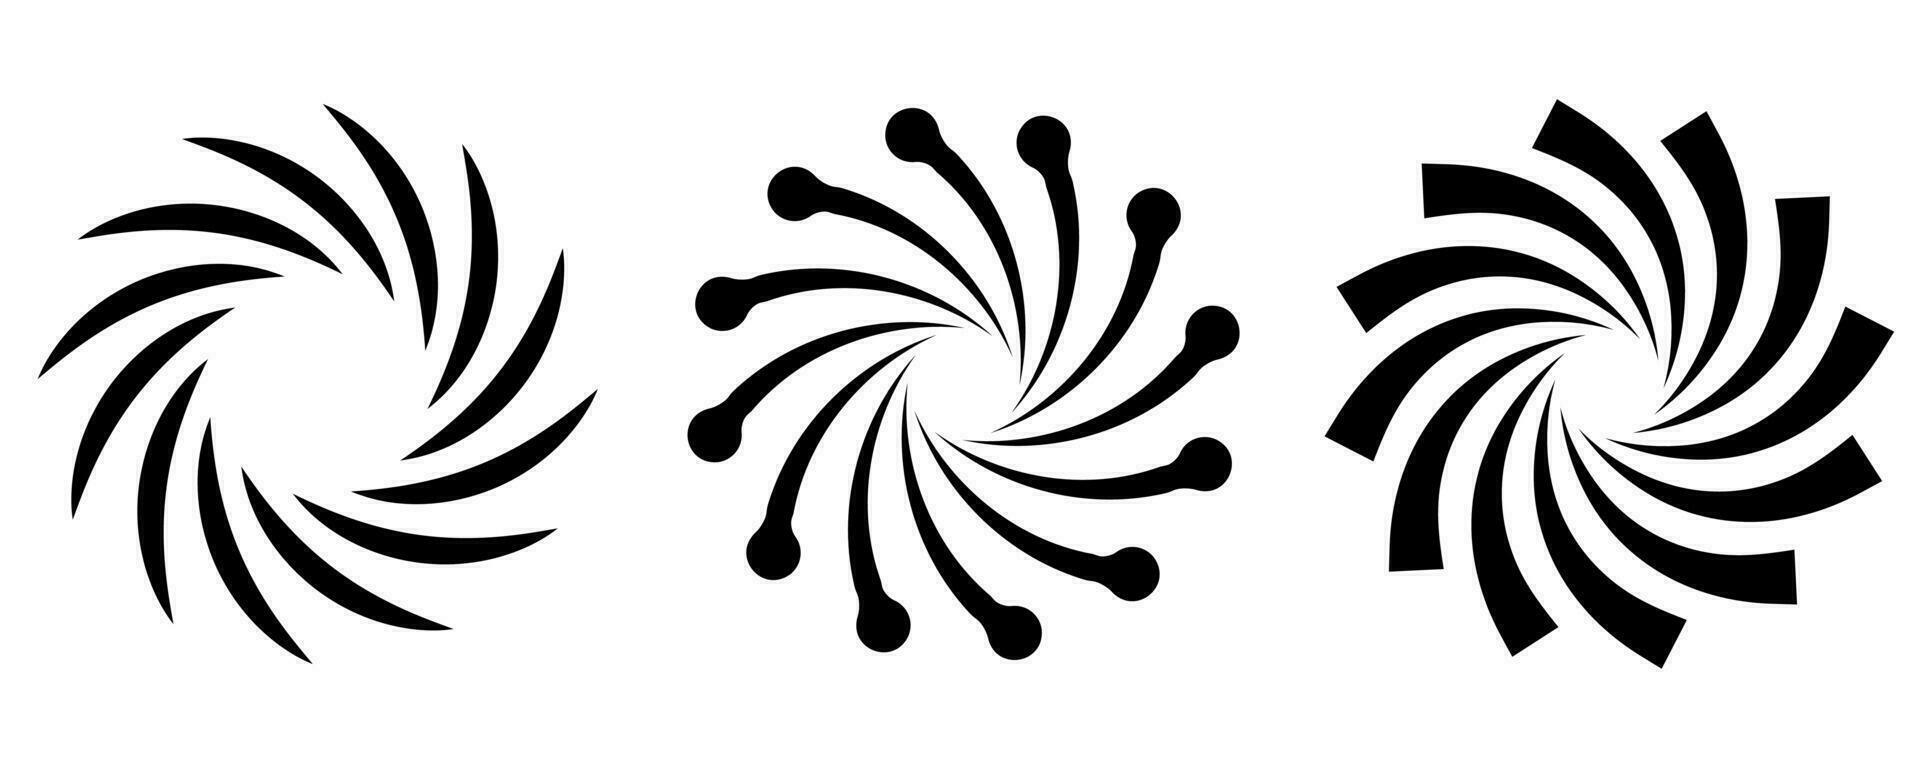 vortex icon set isolated on white background vector